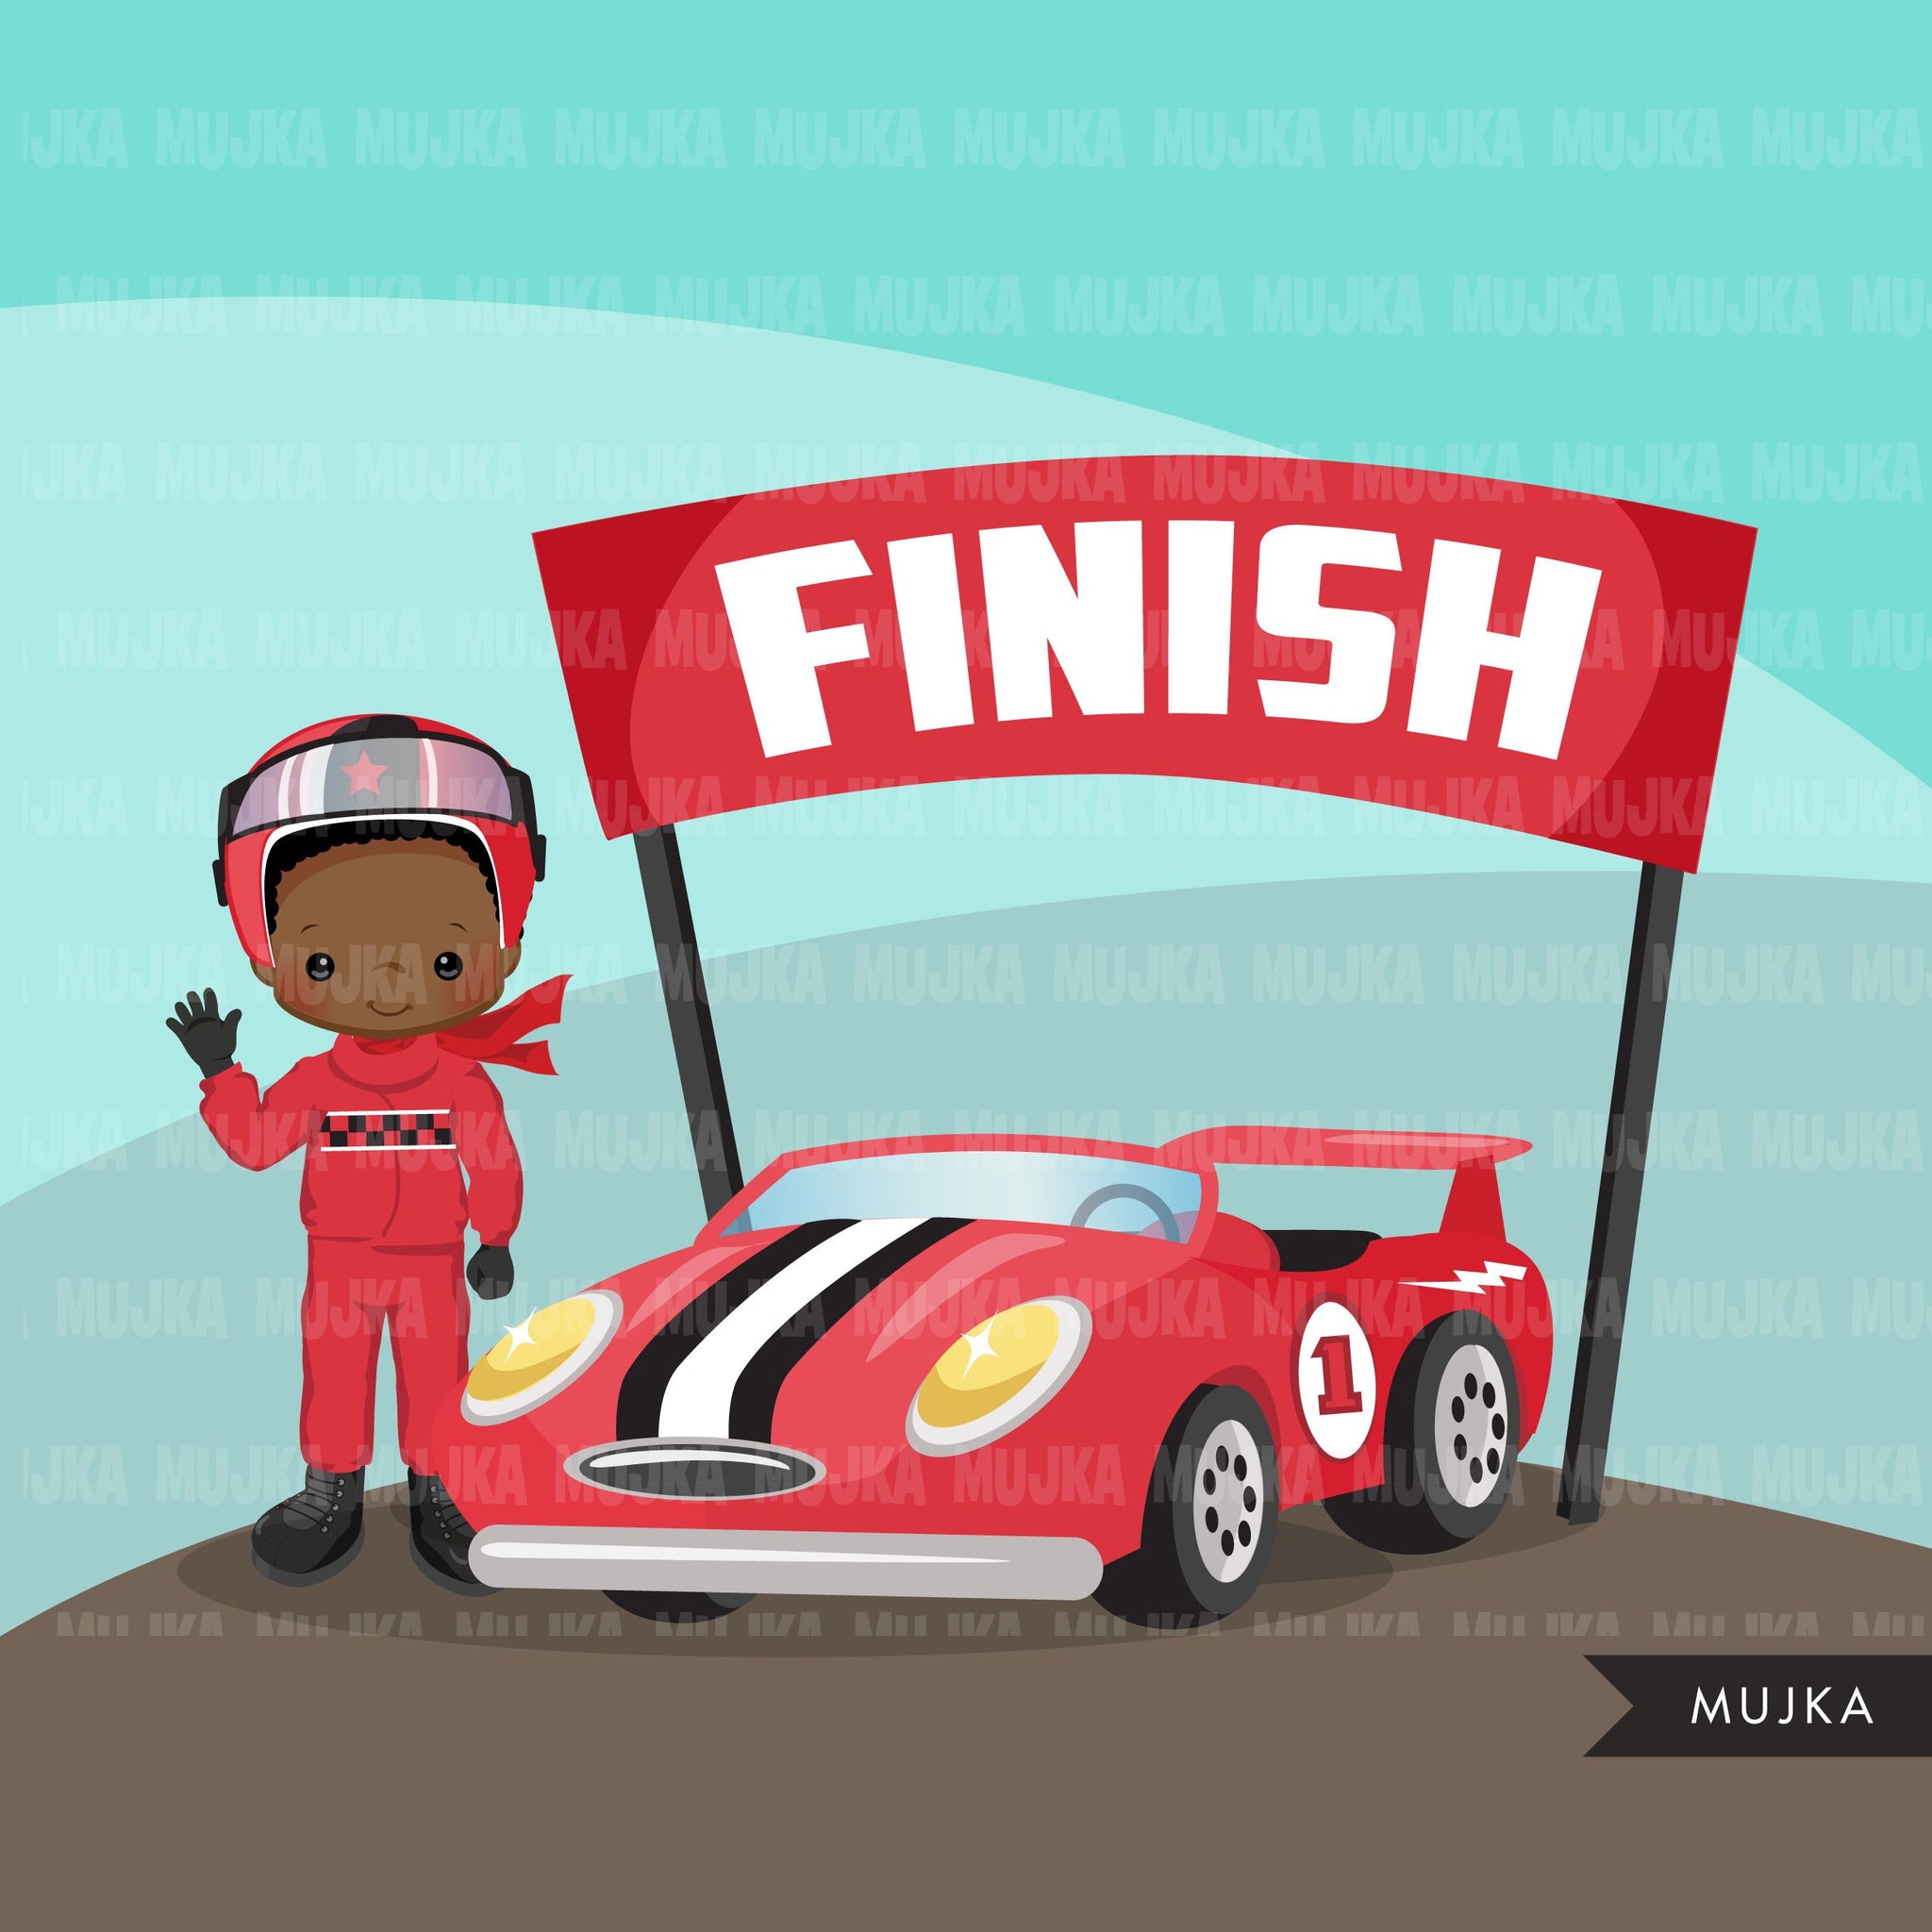 Car Racing Clipart. Boys red team car racing formula 1 graphics